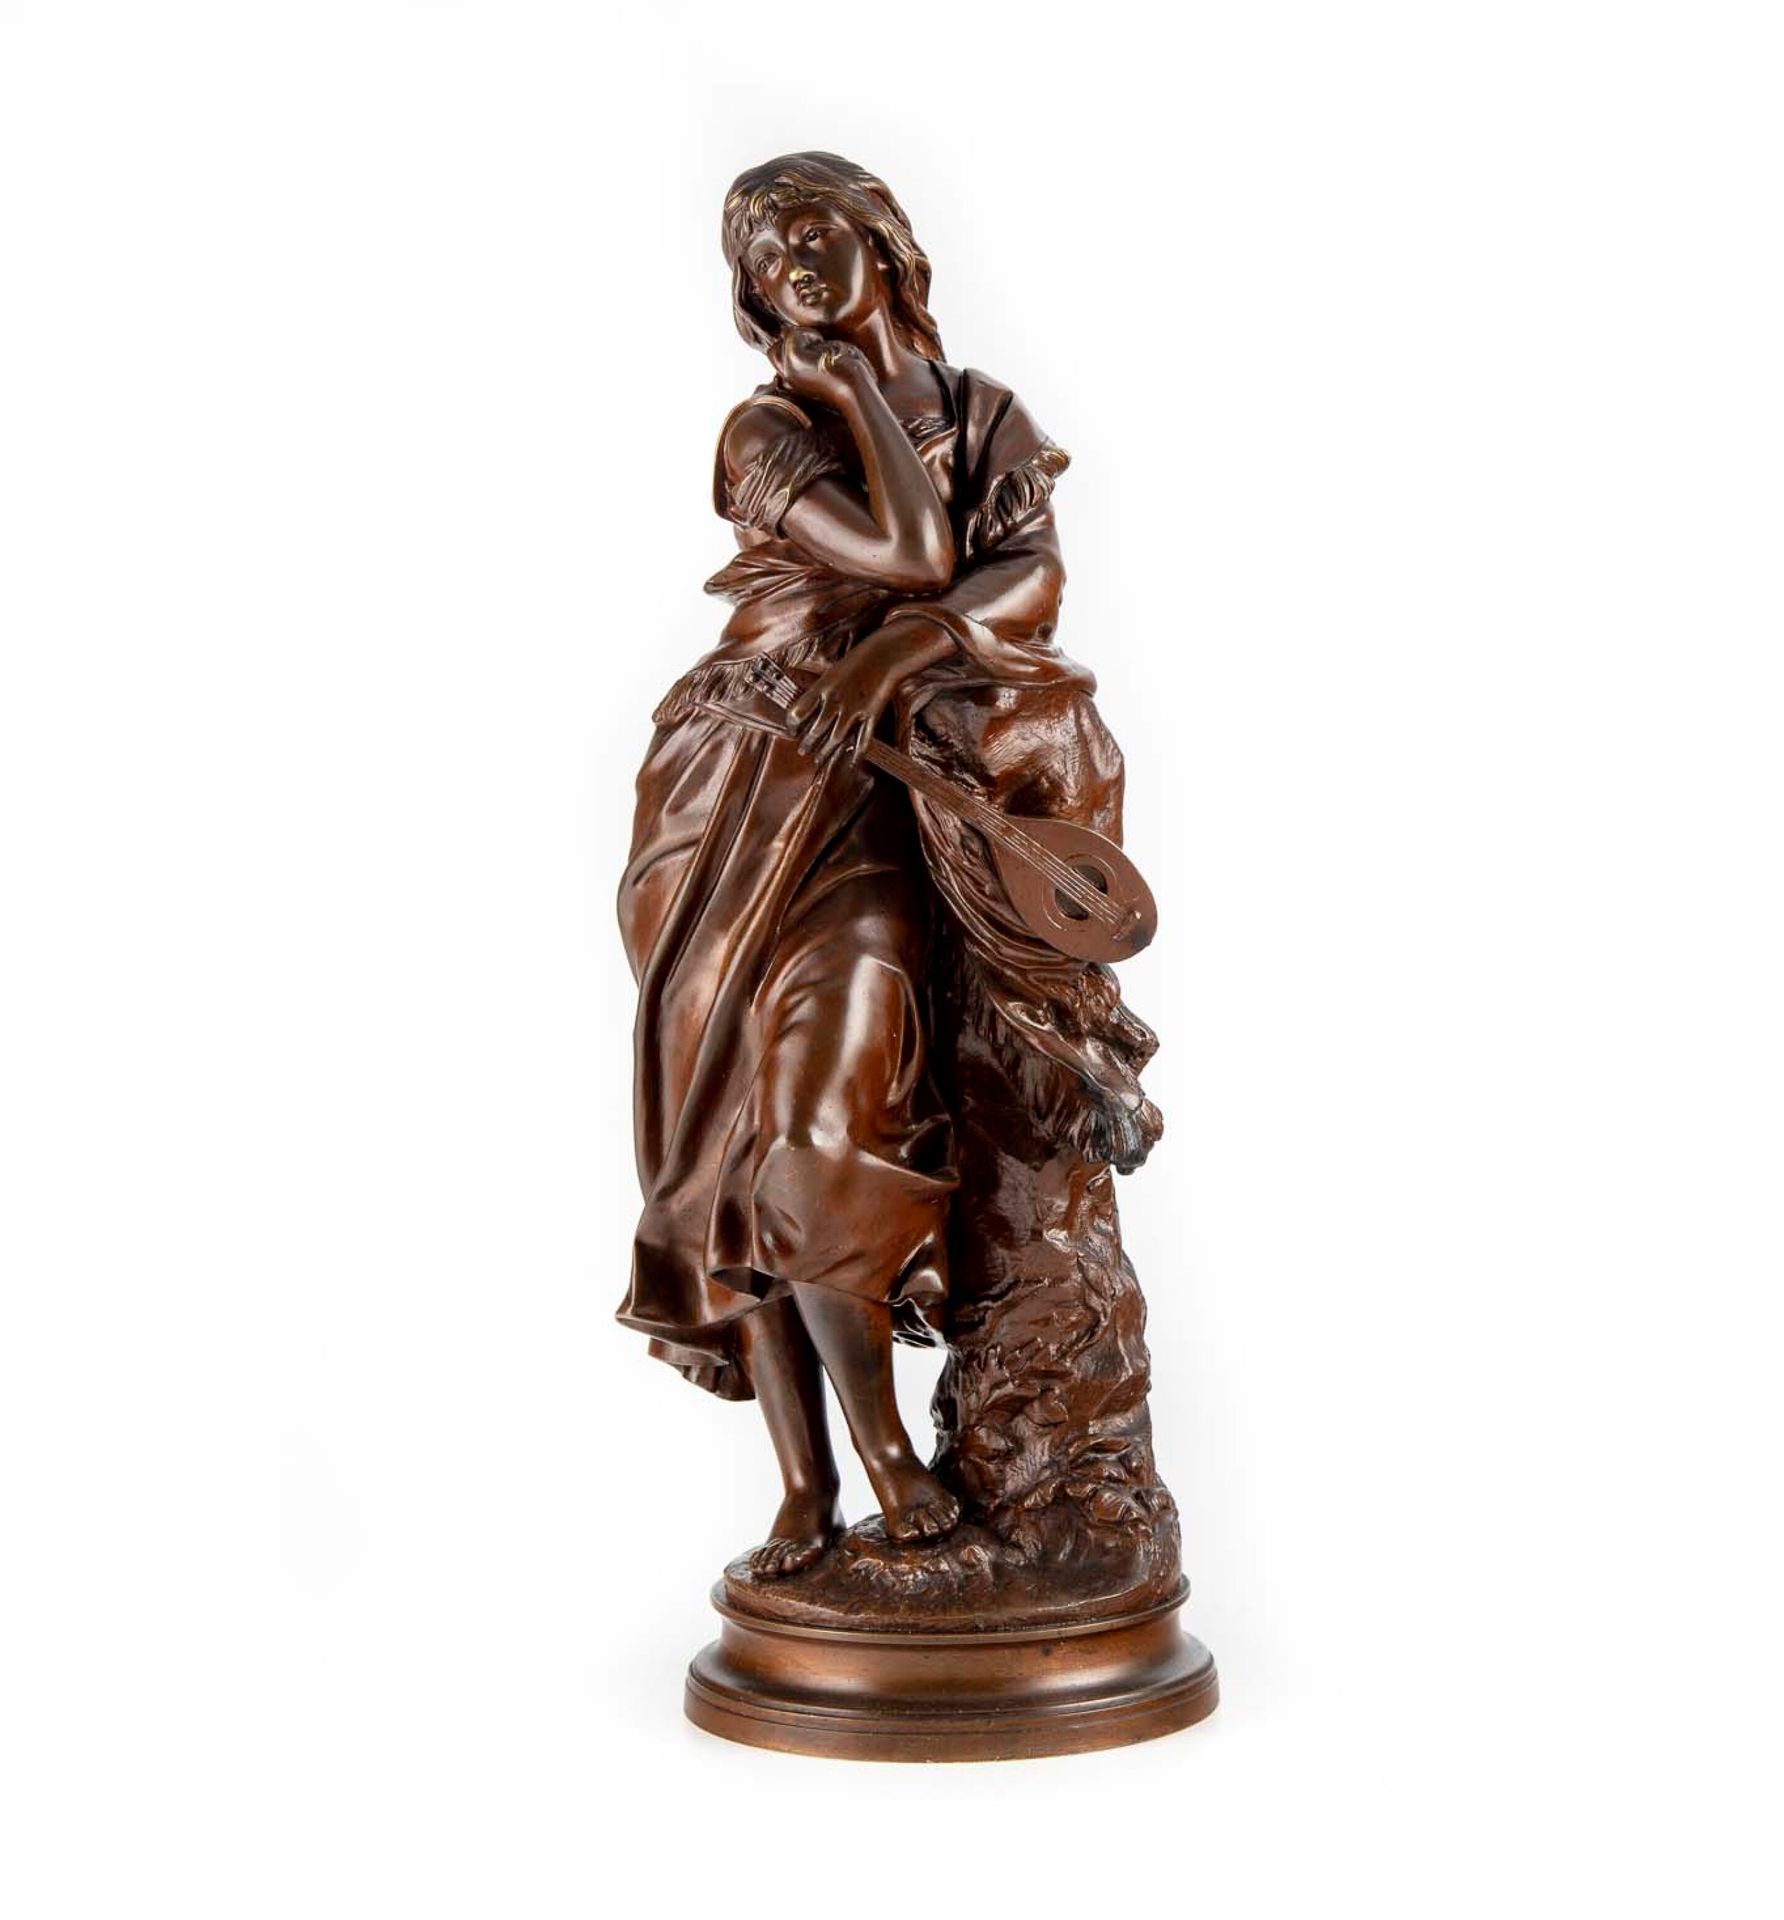 GAUDEZ 阿德里安-艾蒂安-高德 (1845-1902)

米尼翁

古铜色的雕塑

H.43厘米